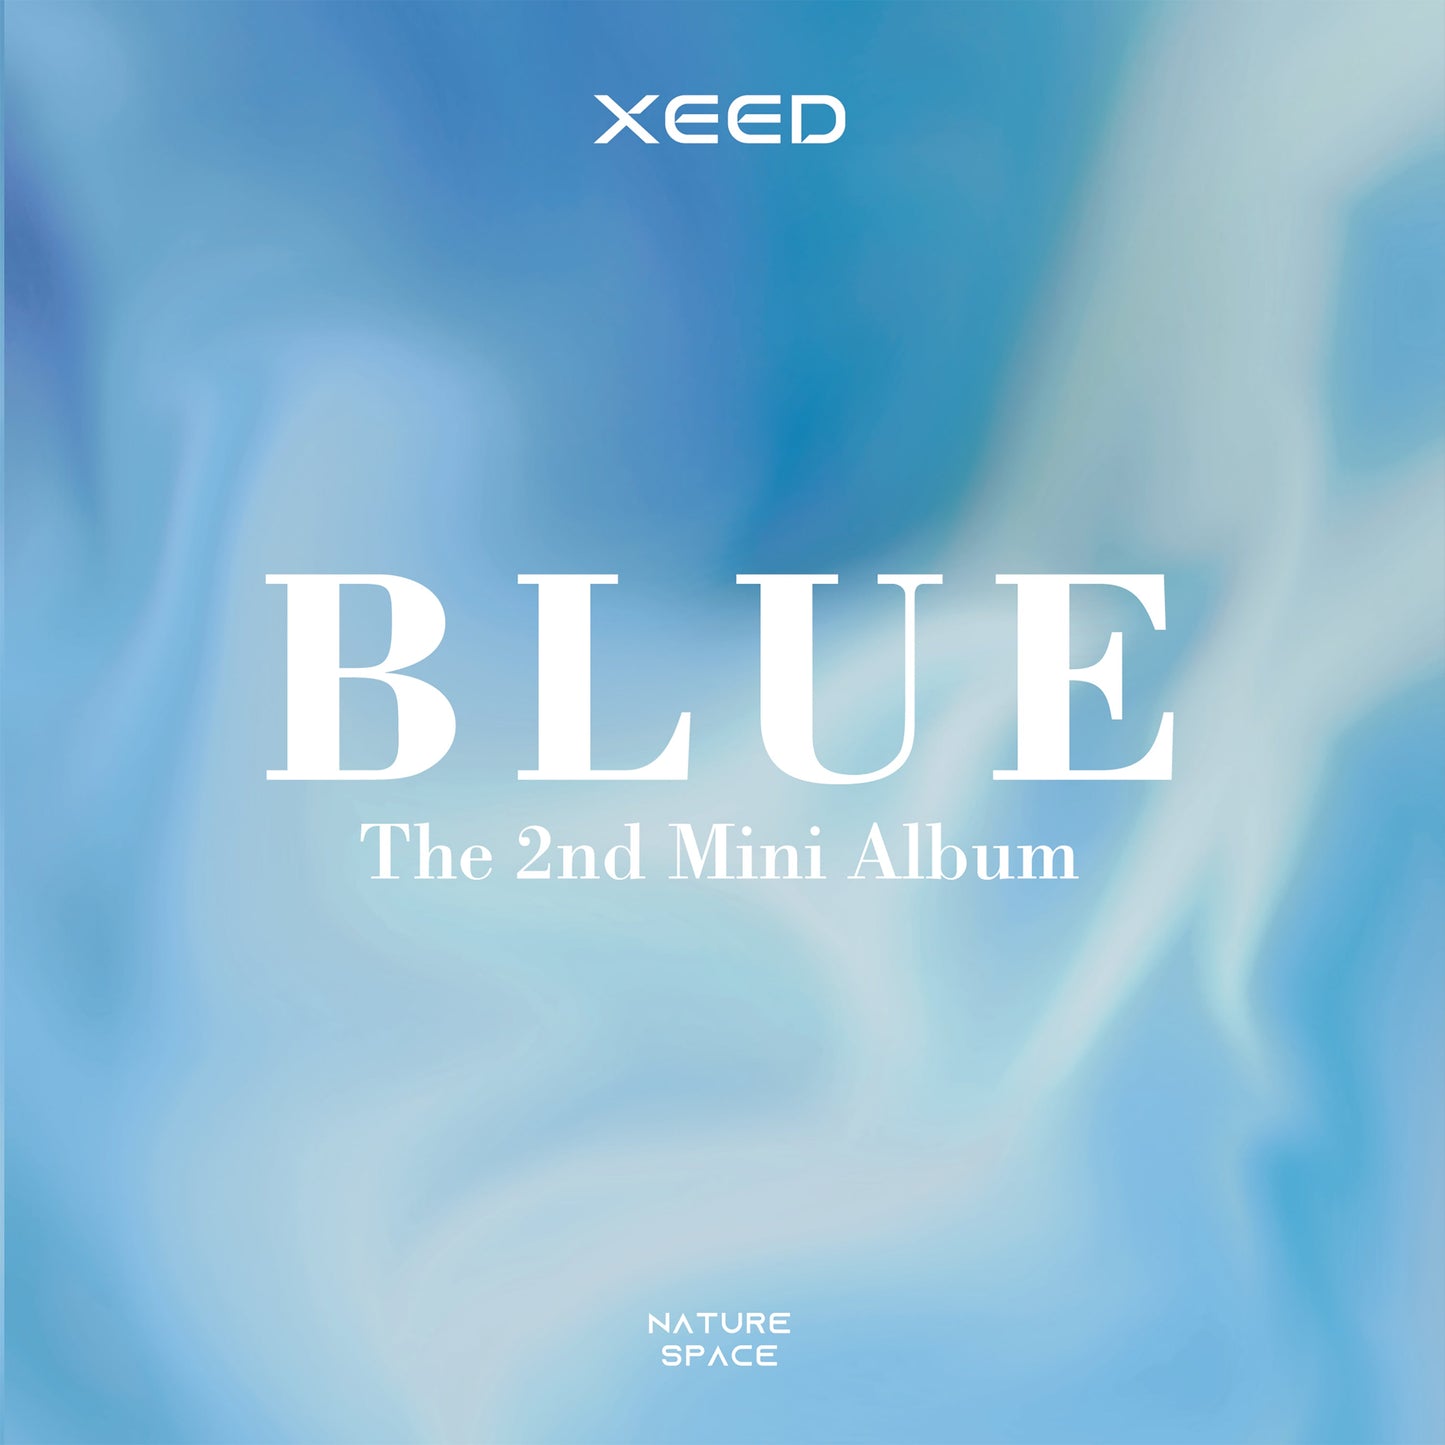 XEED 2ND MINI ALBUM 'BLUE' COVER